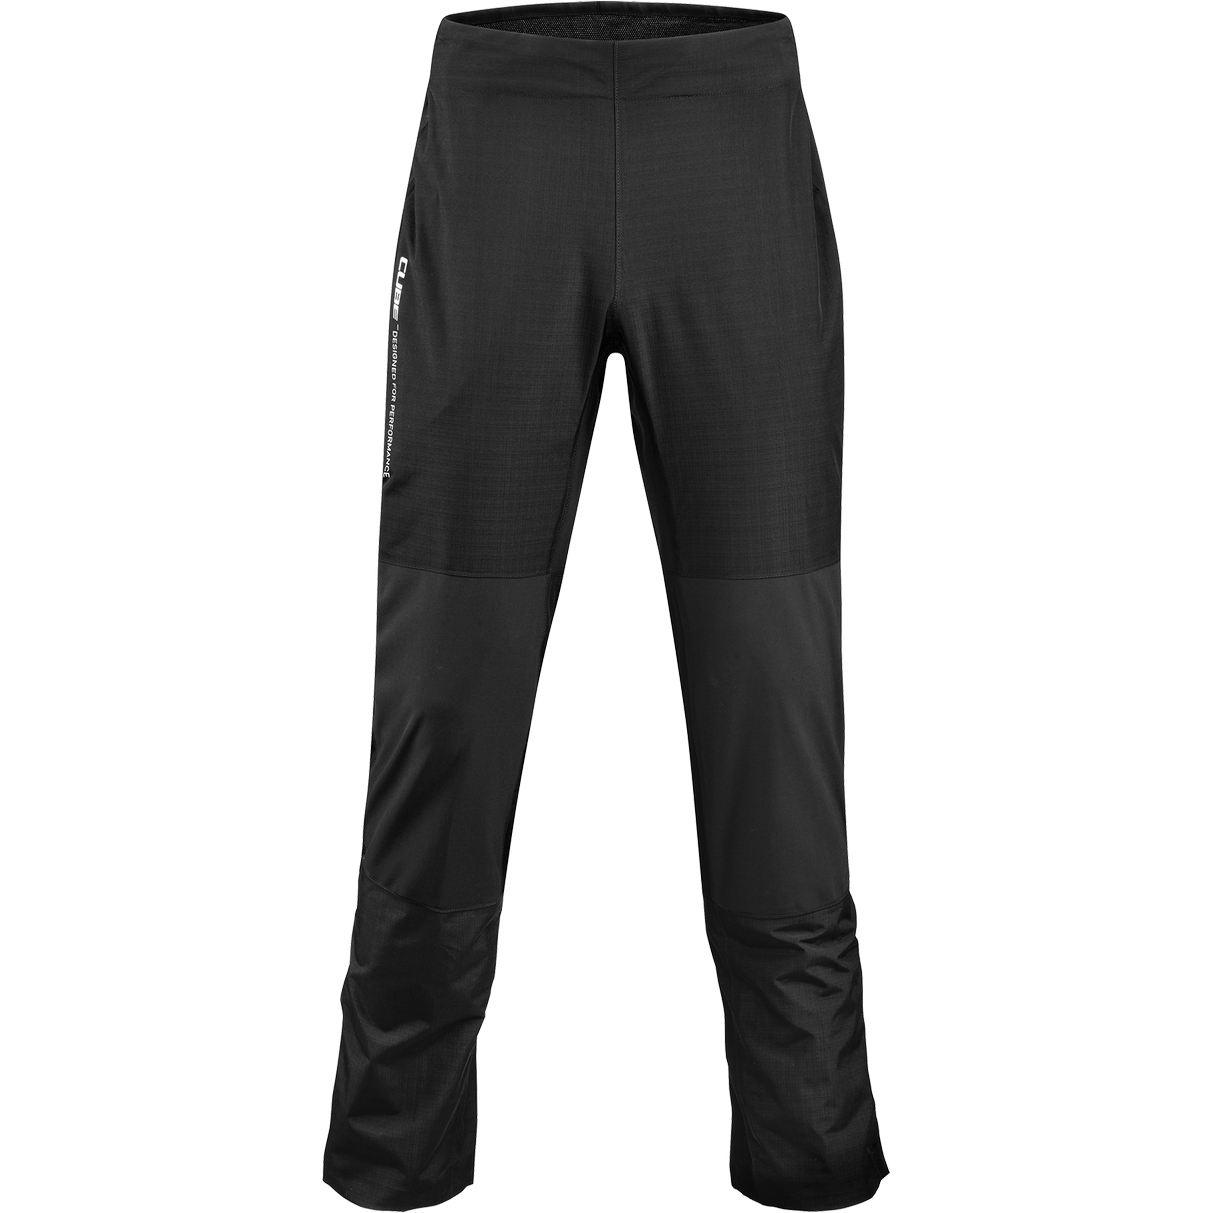 9. Altura Nevis Waterproof Cycling Trousers, £35.99...